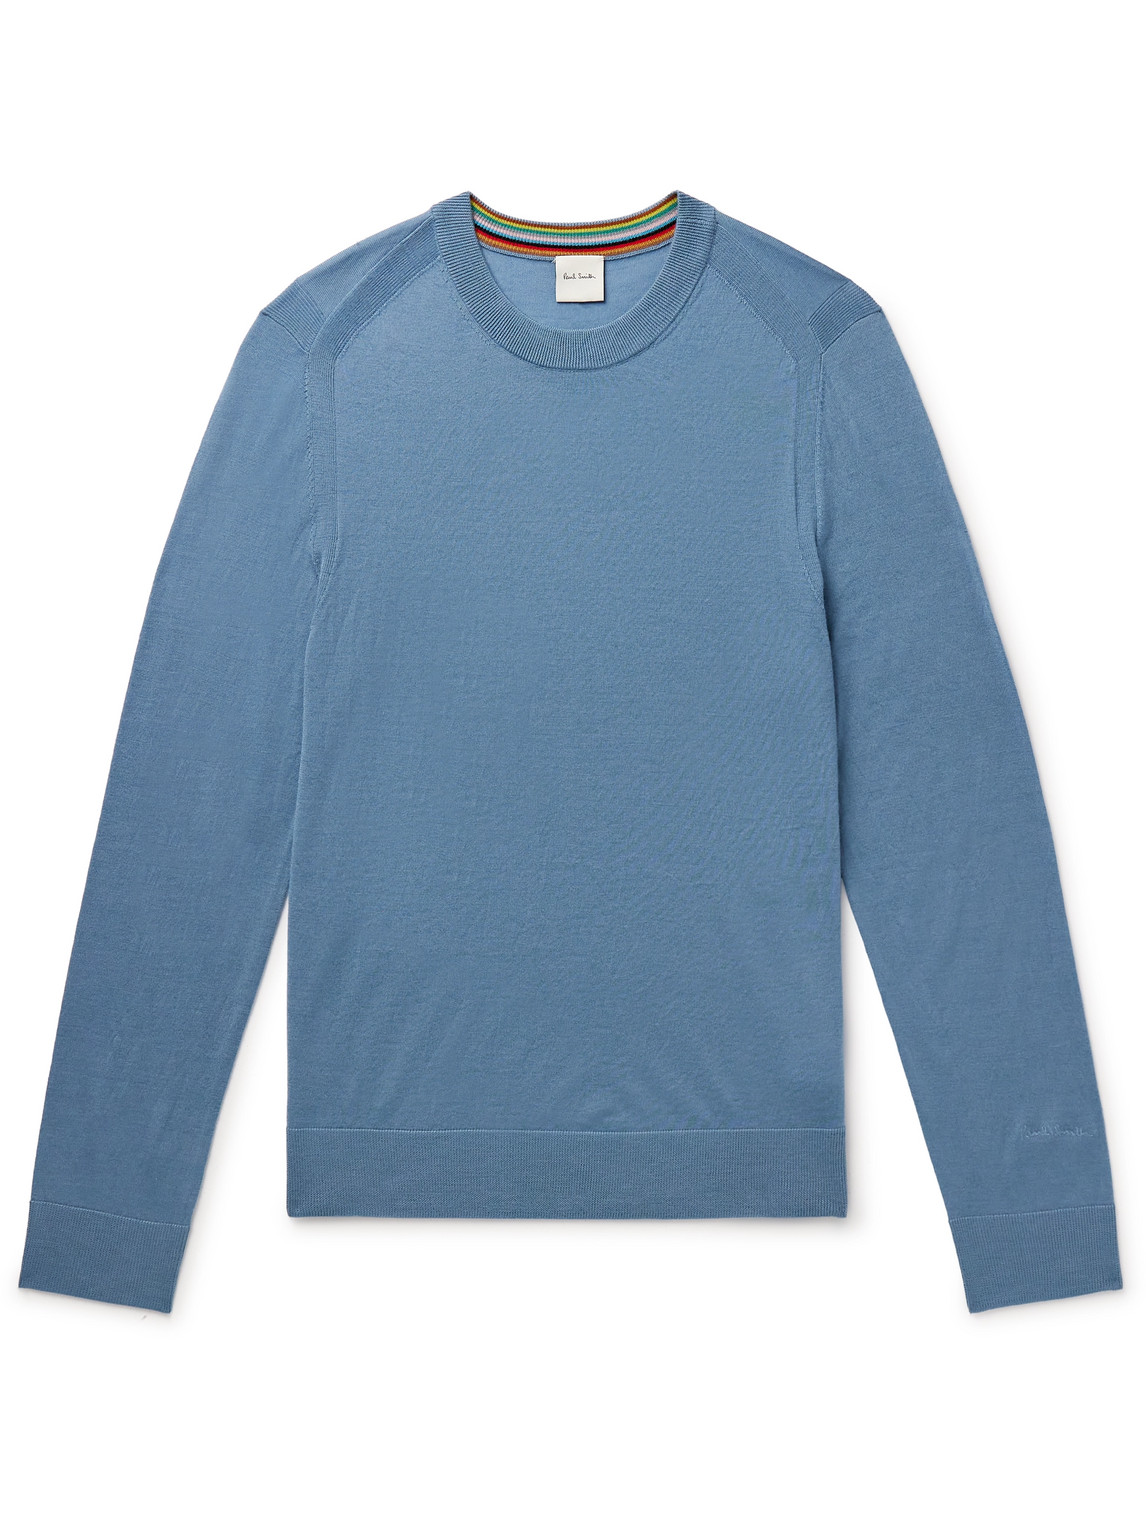 Paul Smith - Slim-Fit Logo-Embroidered Merino Wool Sweater - Men - Blue - L von Paul Smith